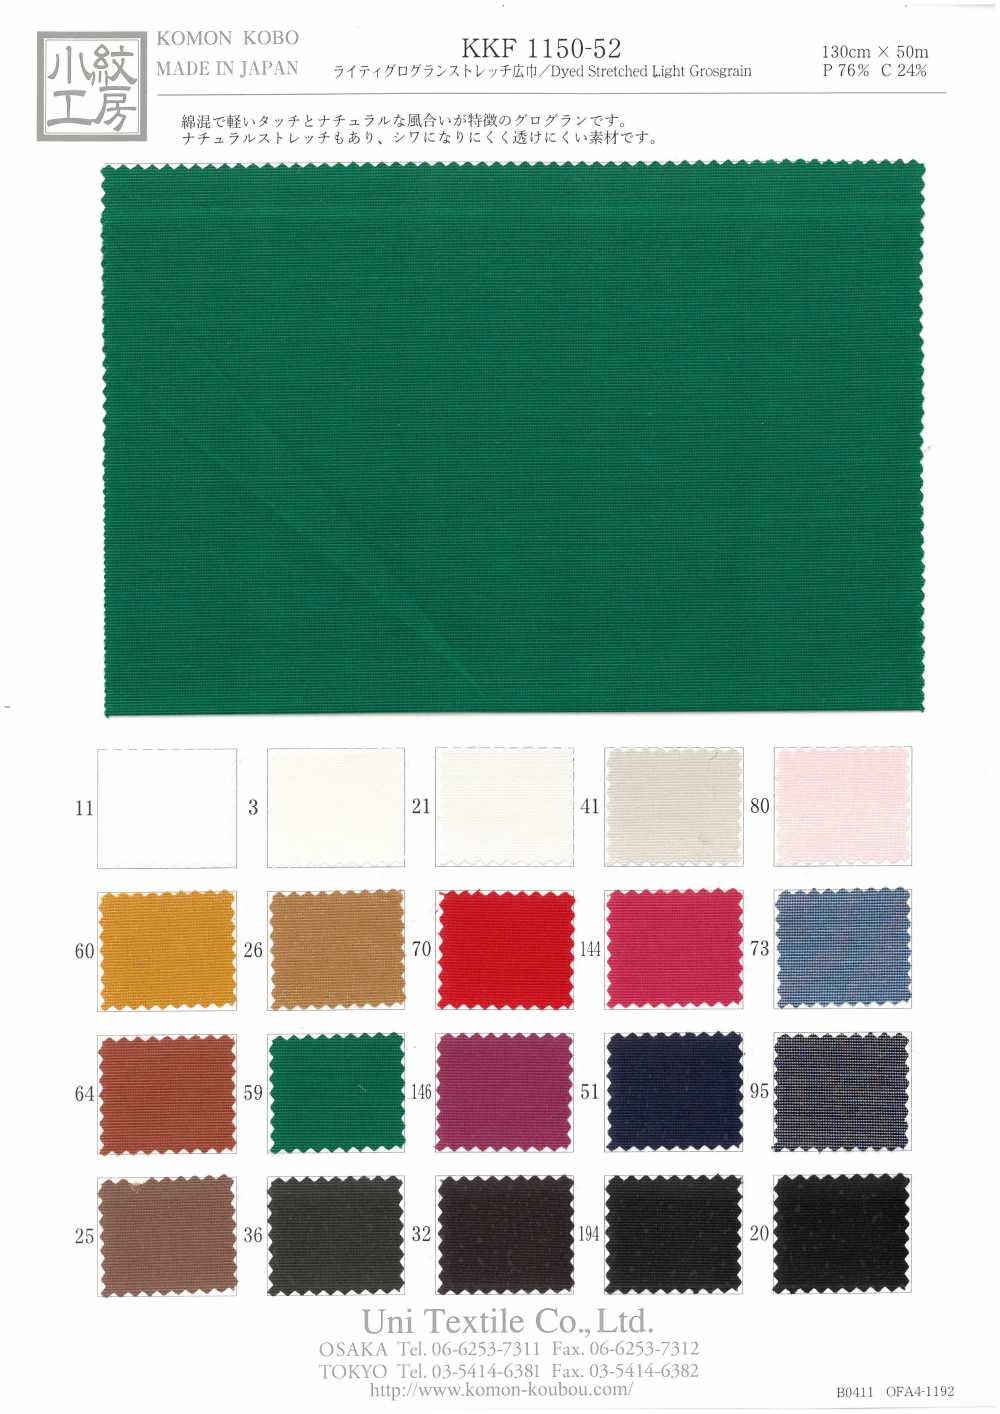 KKF1150-52 Lighty Grosgrain Stretch Wide[Textile / Fabric] Uni Textile